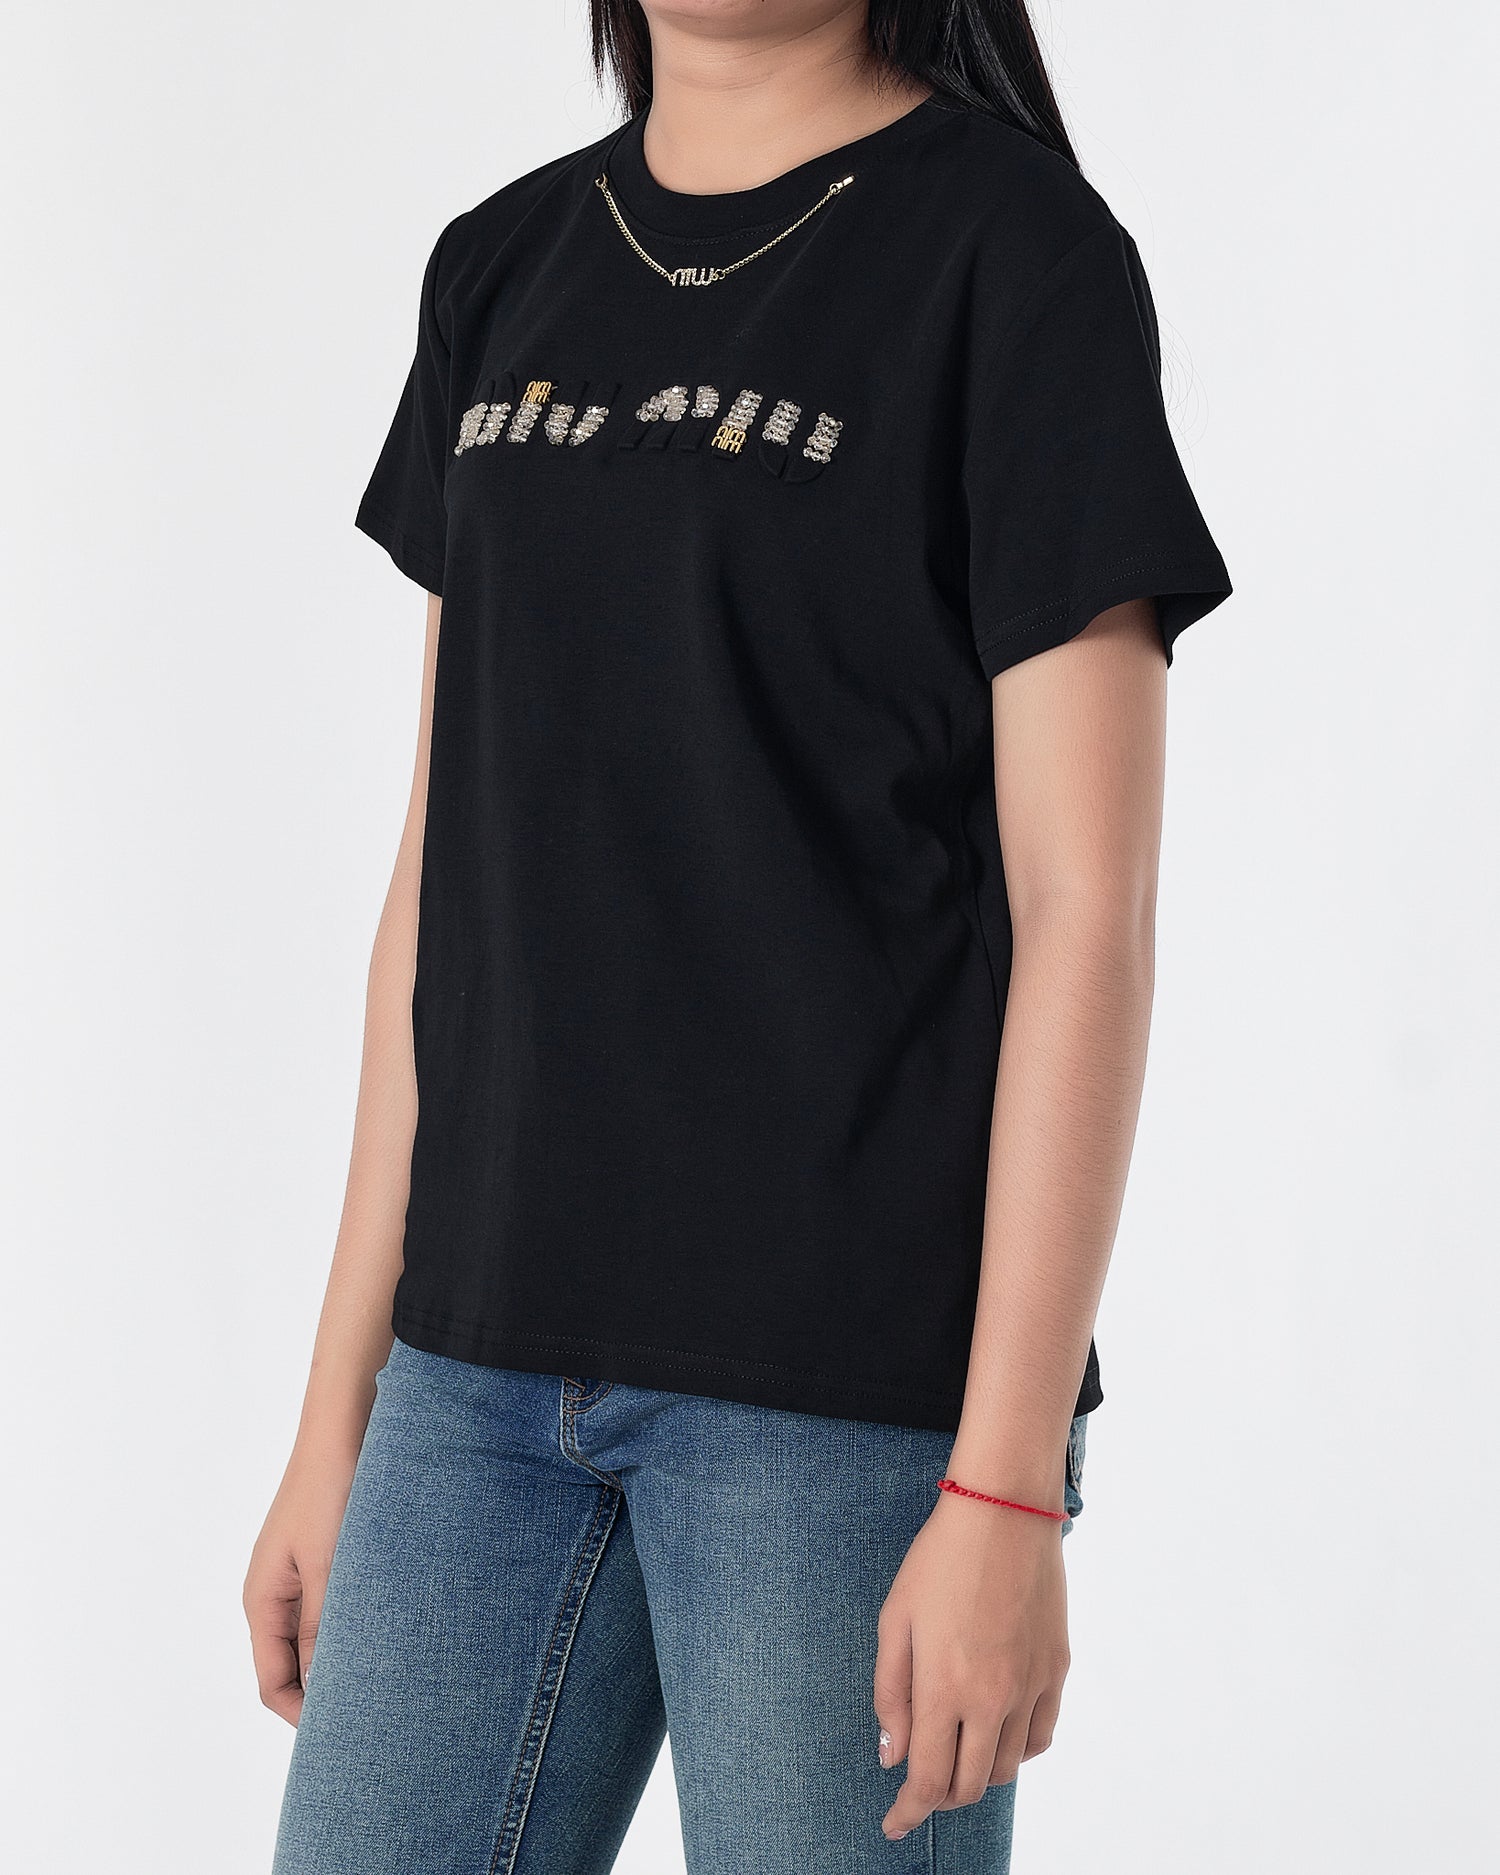 MIU Rhinestone Neck Chain Lady Black T-Shirt 27.90